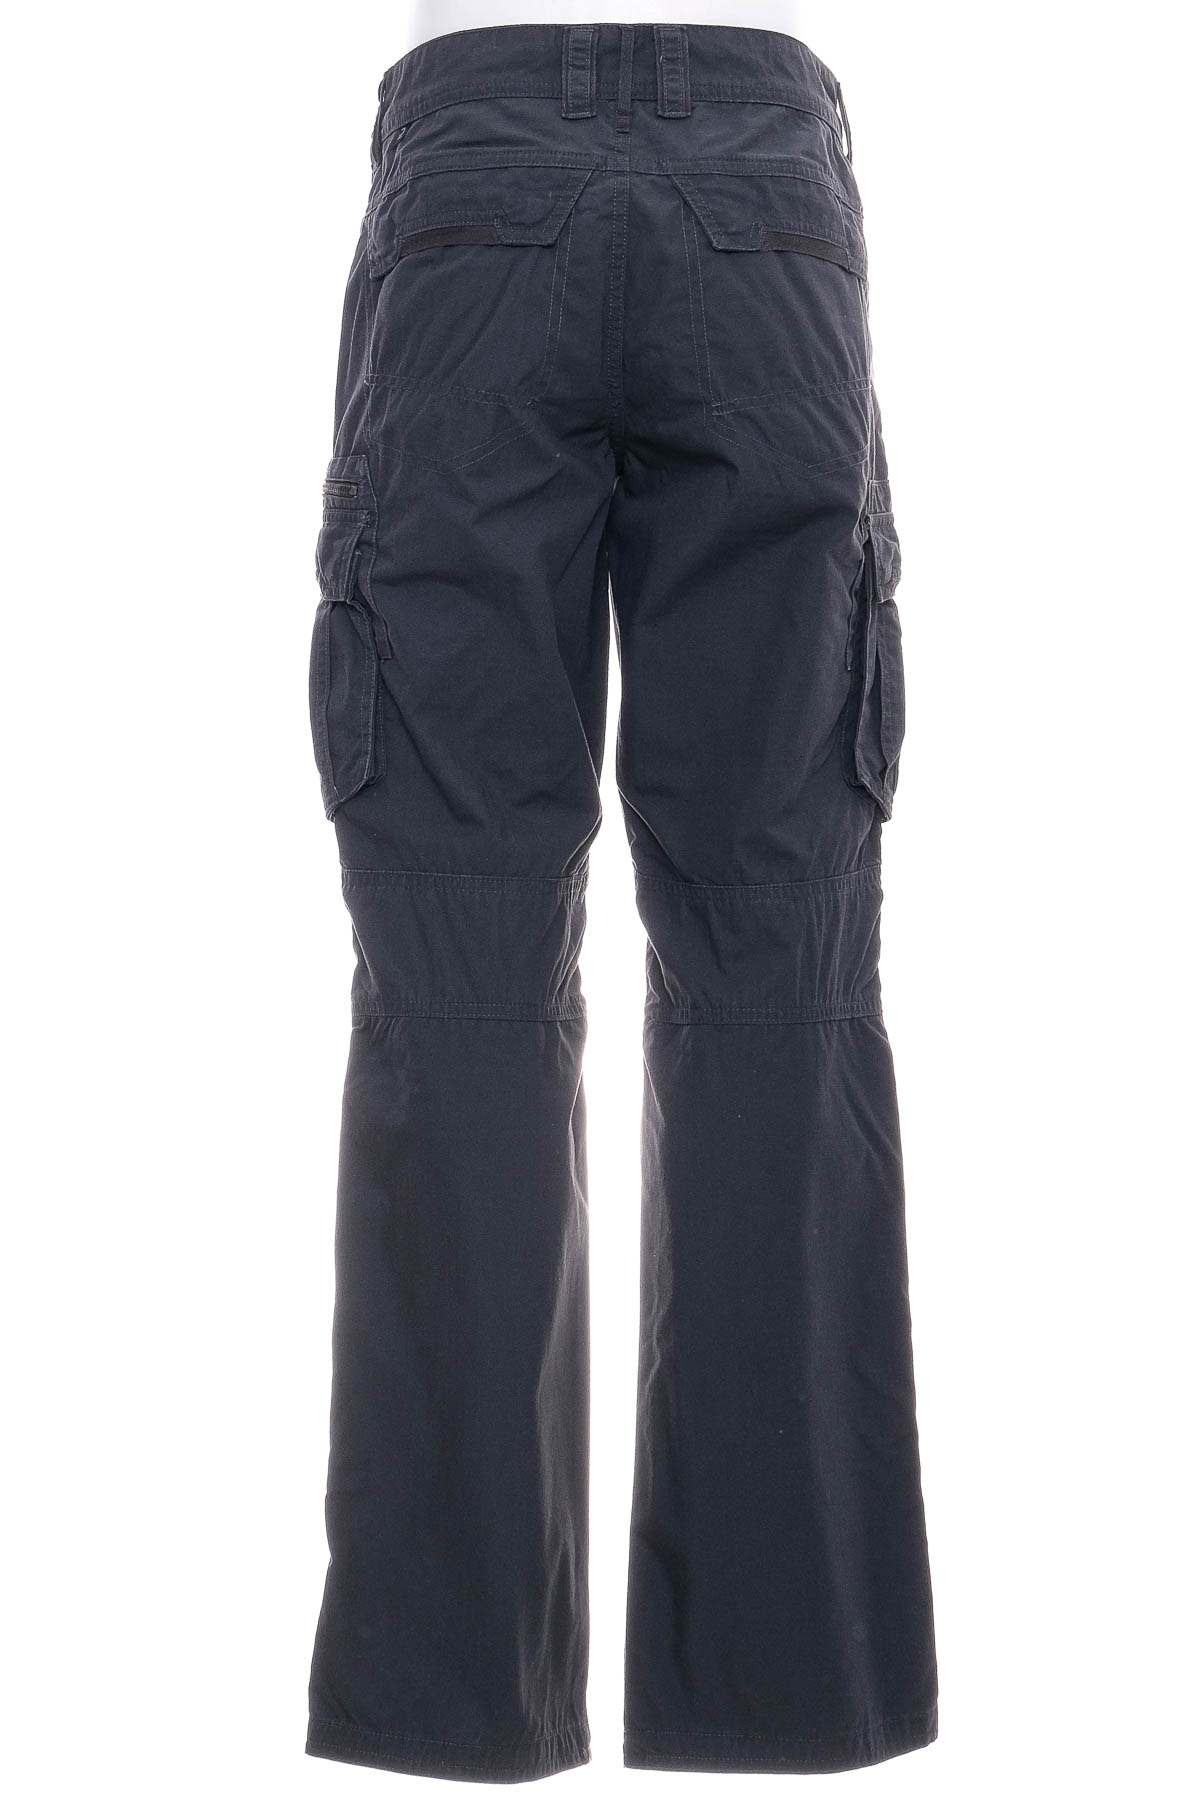 Pantalon pentru bărbați - FORCLAZ - 1